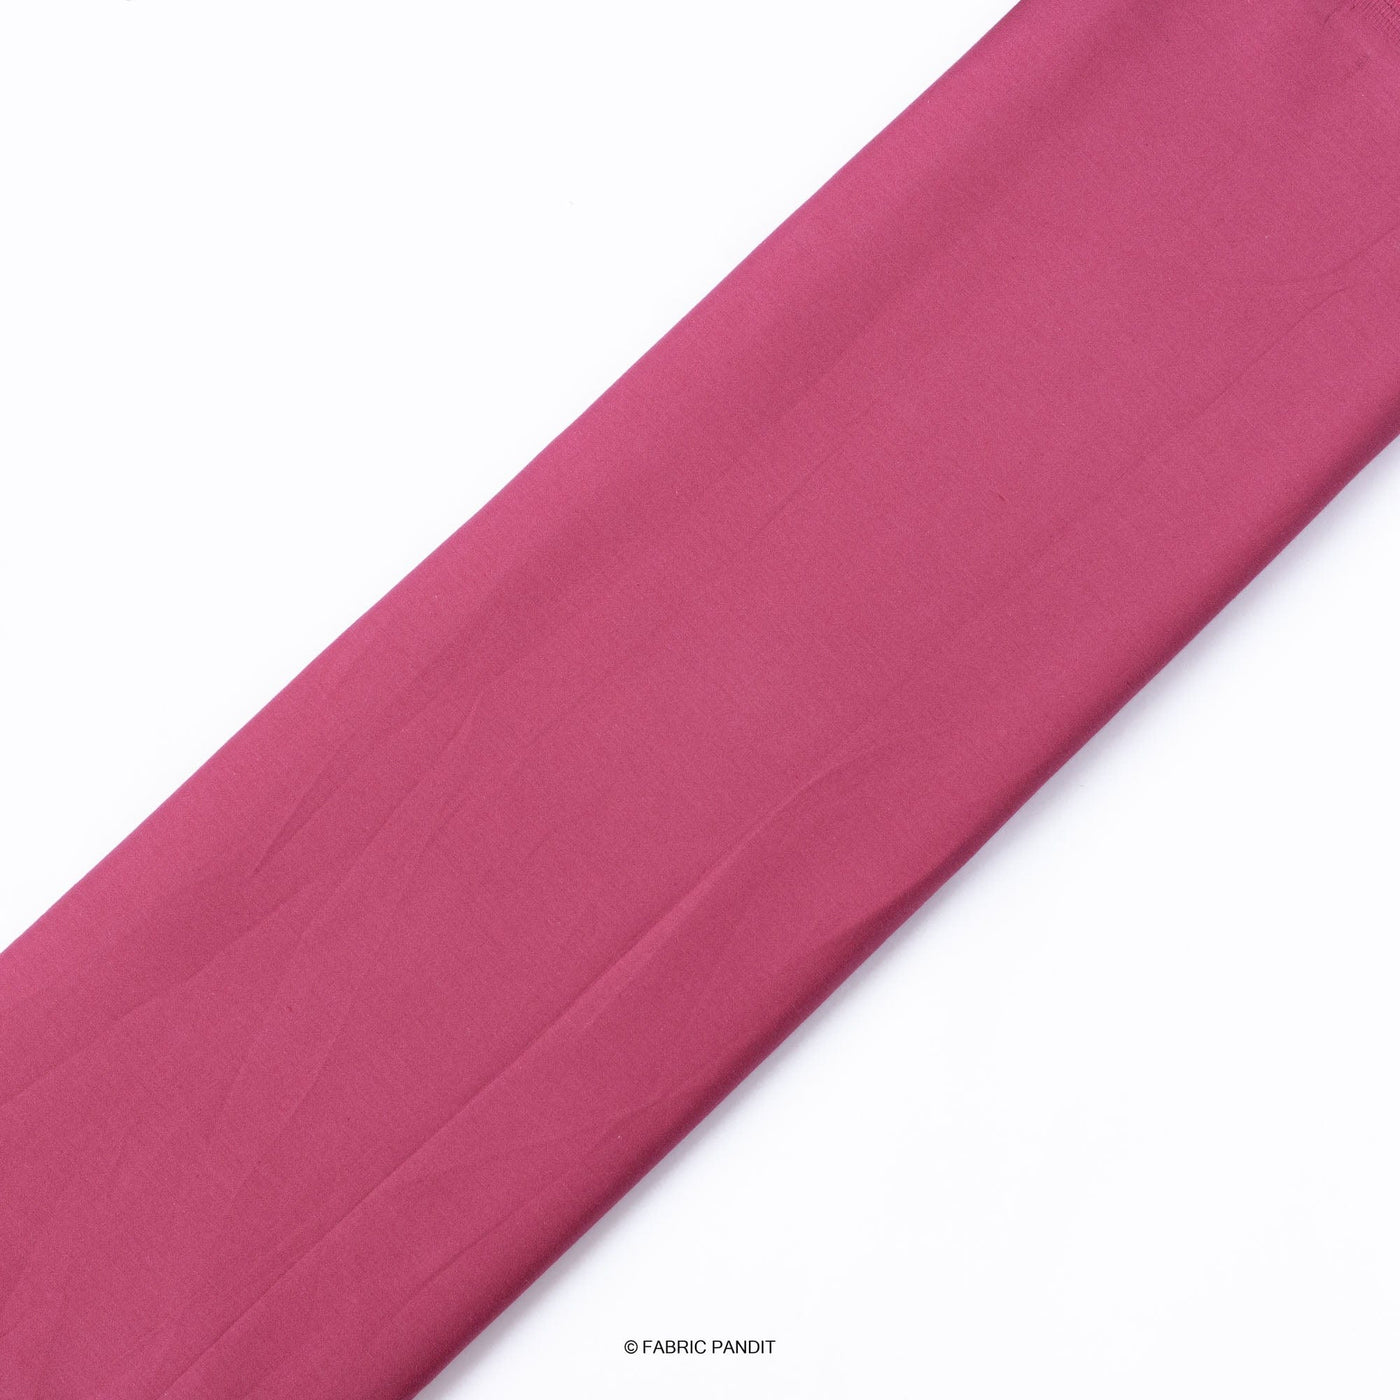 Fabric Pandit Shirt Rouge Pink Pure Cotton Lycra Stretch Unstitched Men's Shirt Piece (Width 54 Inch | 1.60 Meters)